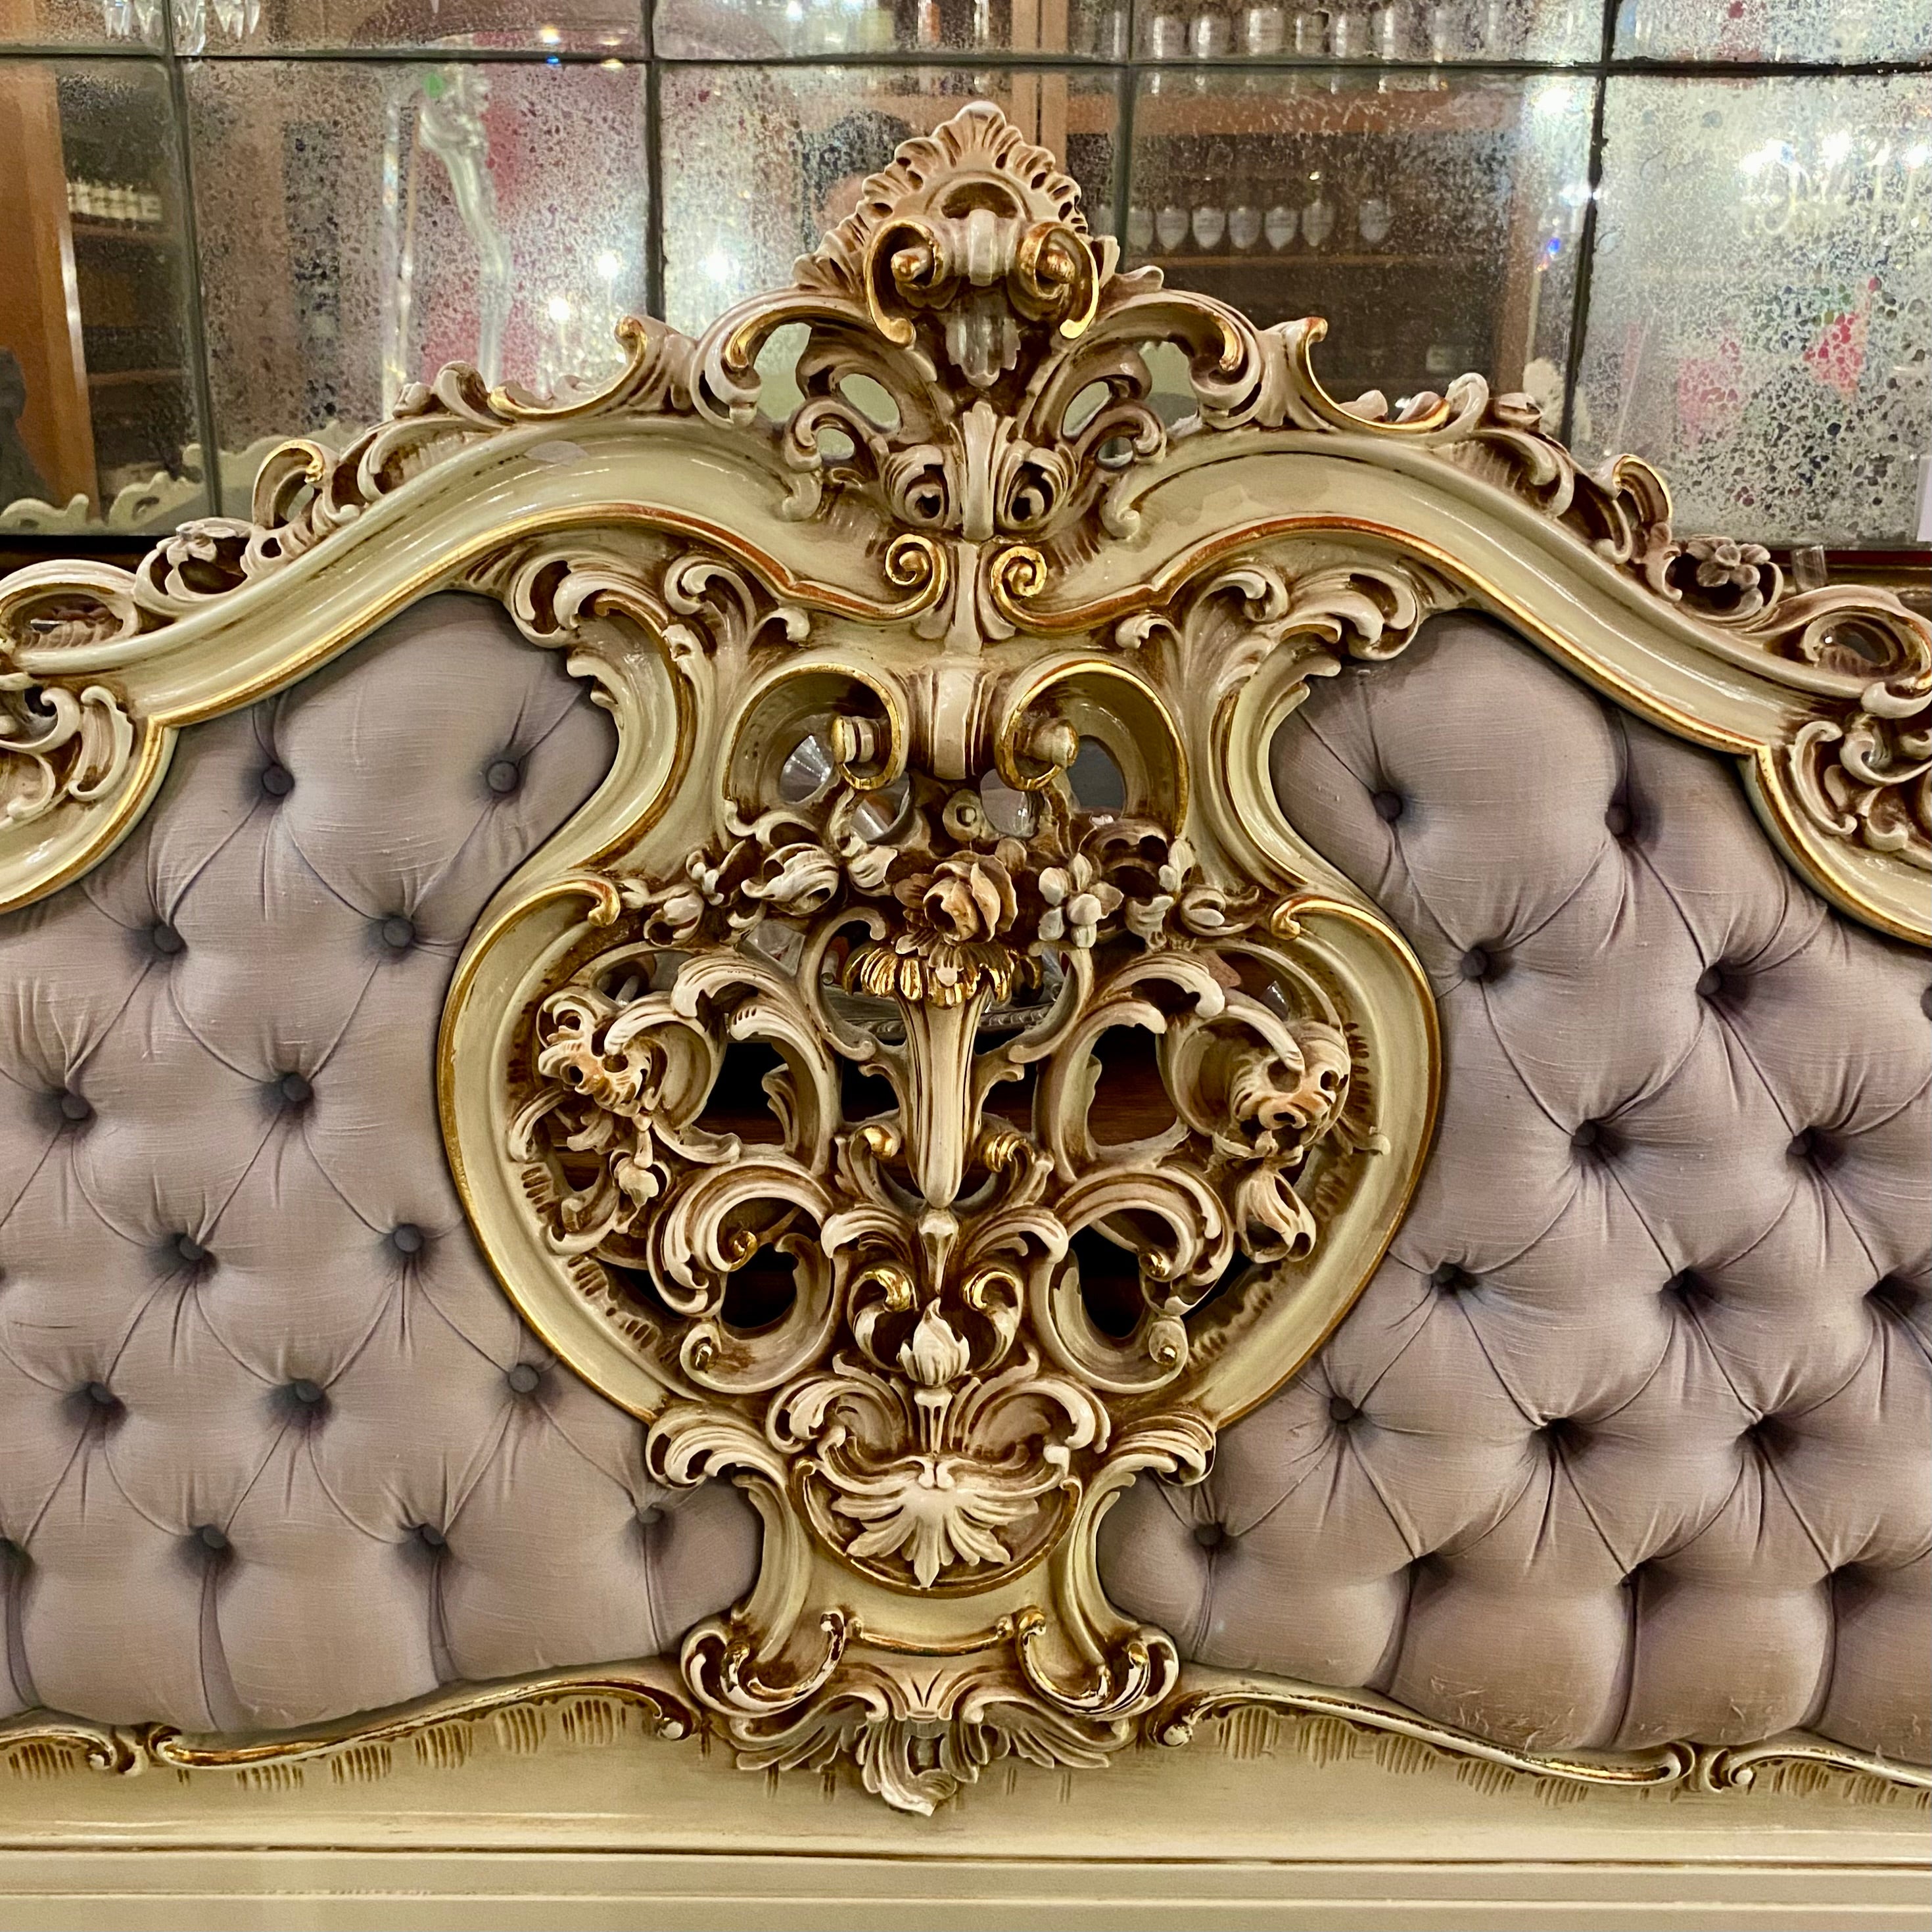 Stunning Antique Italian Gilt Bed Frame - Queen